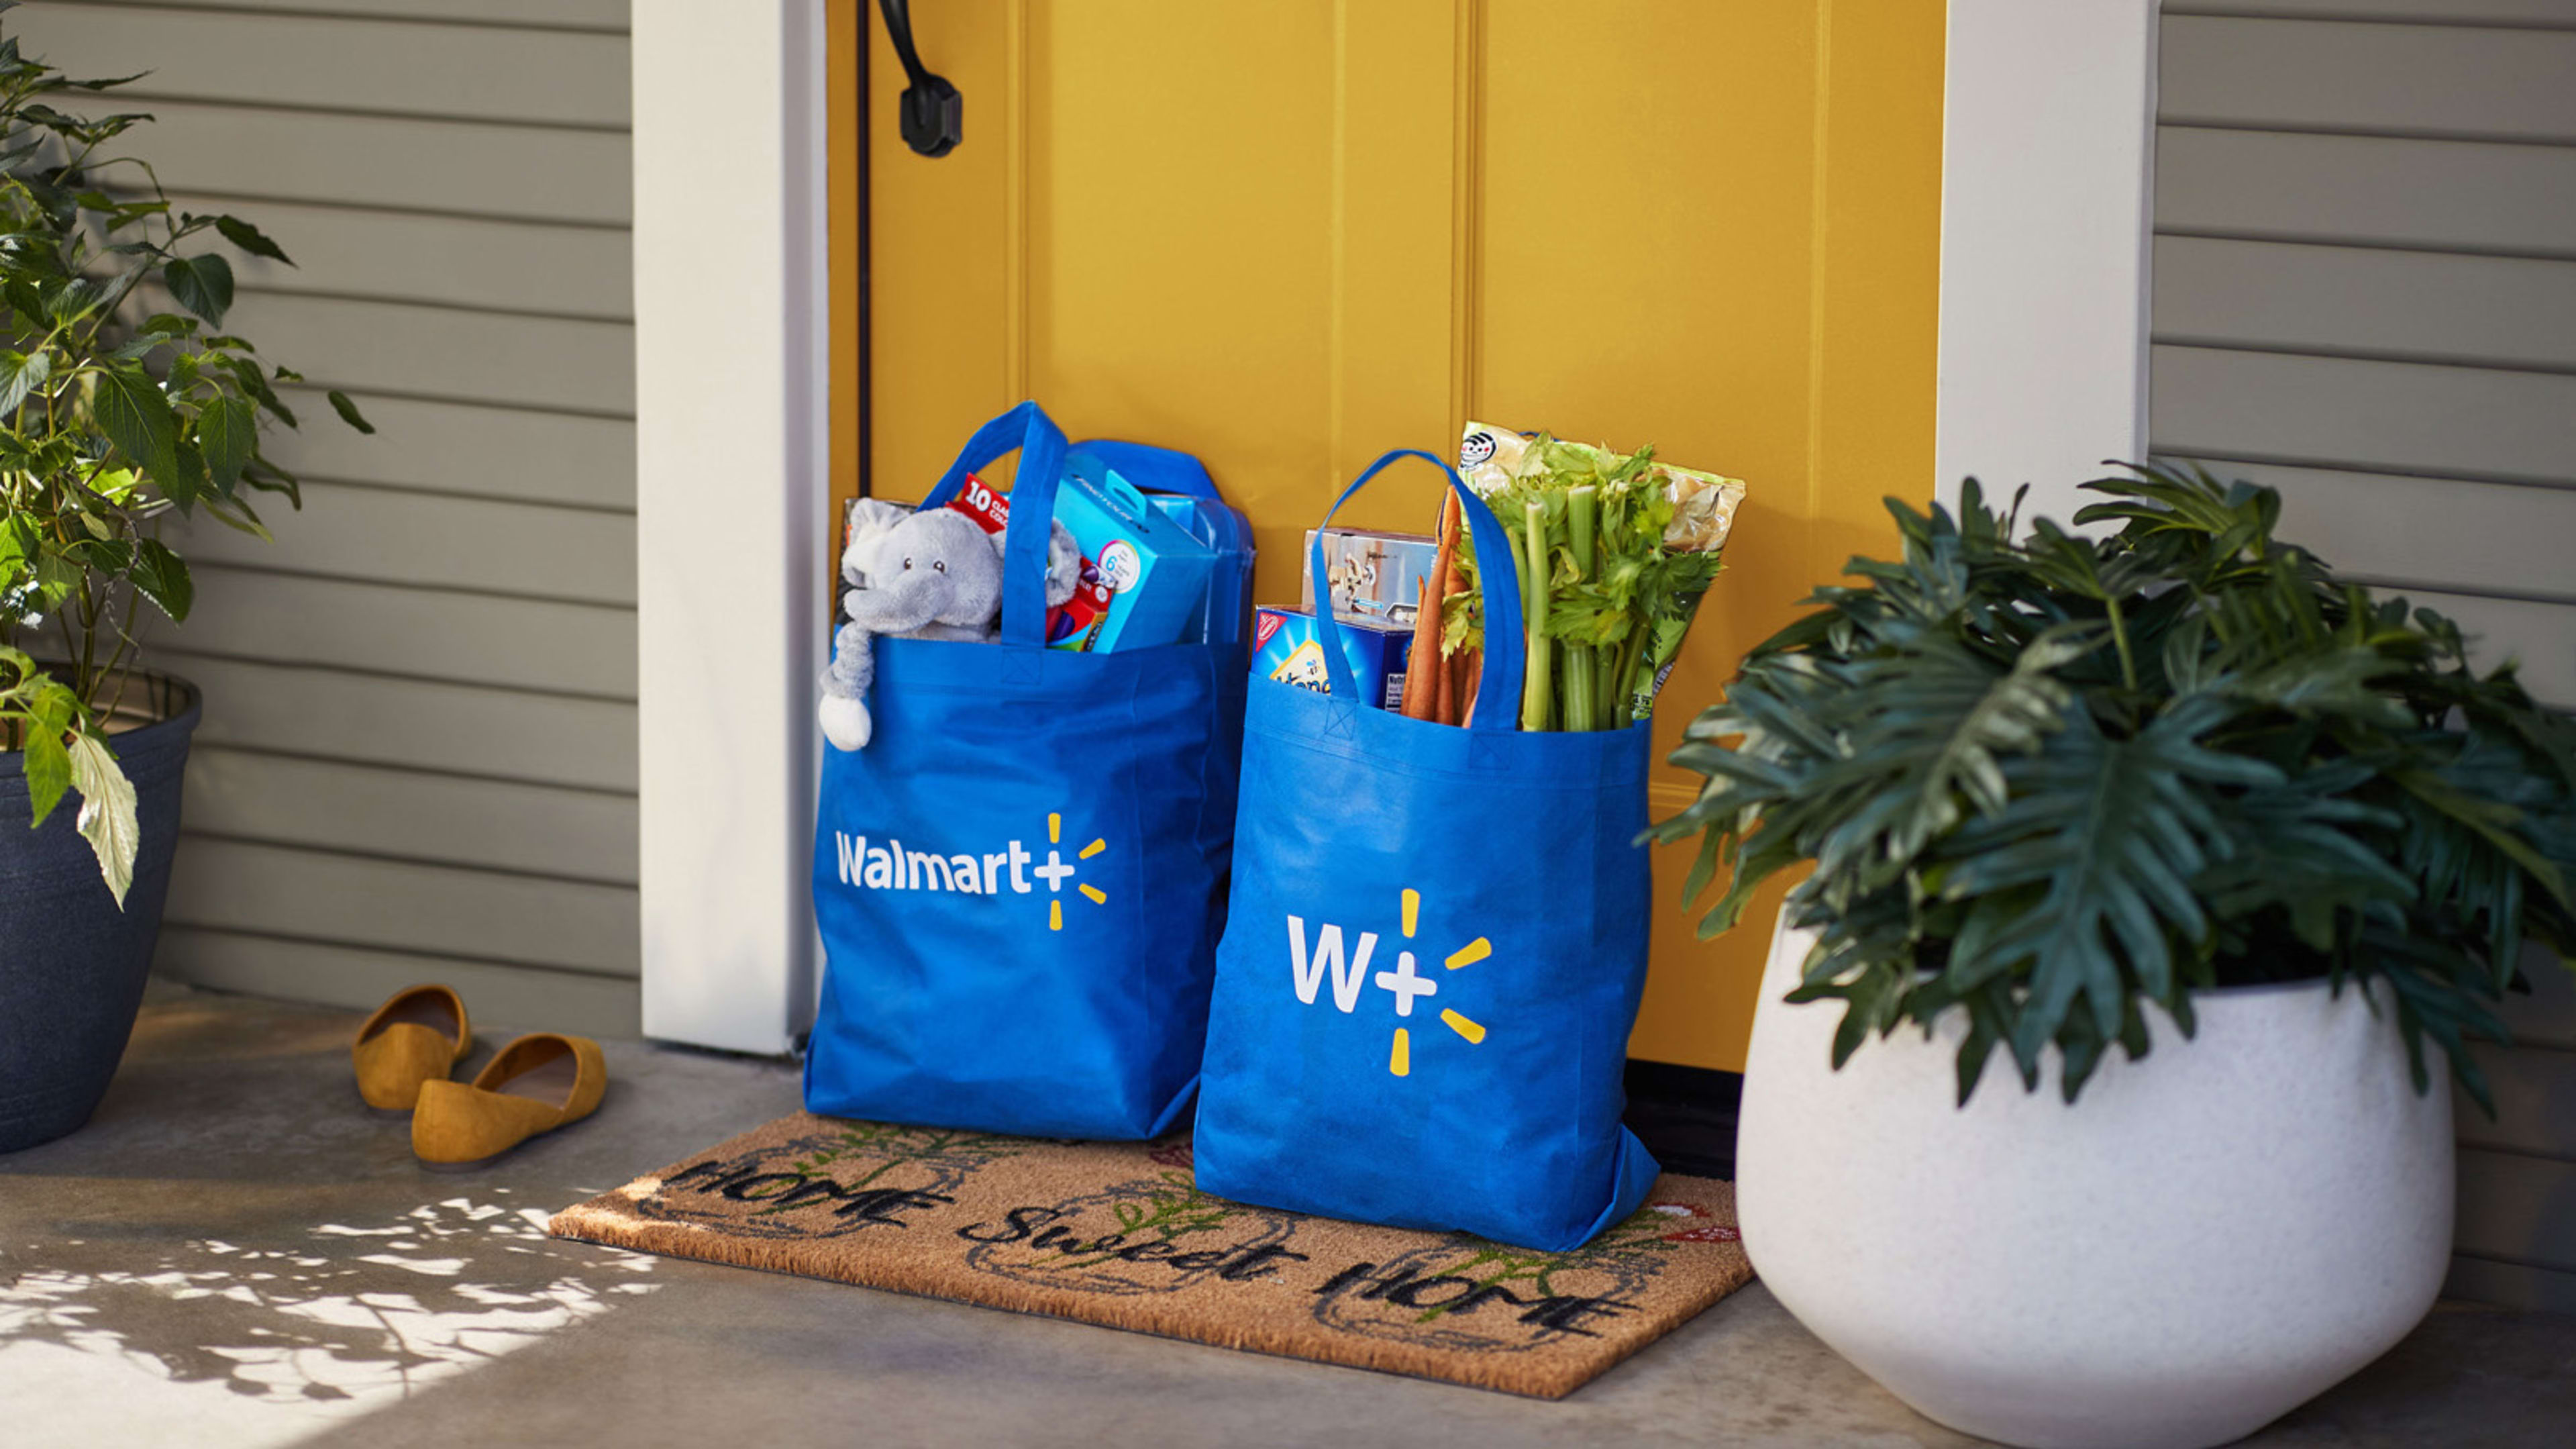 Walmart Plus is a $98-per-year Amazon Prime competitor